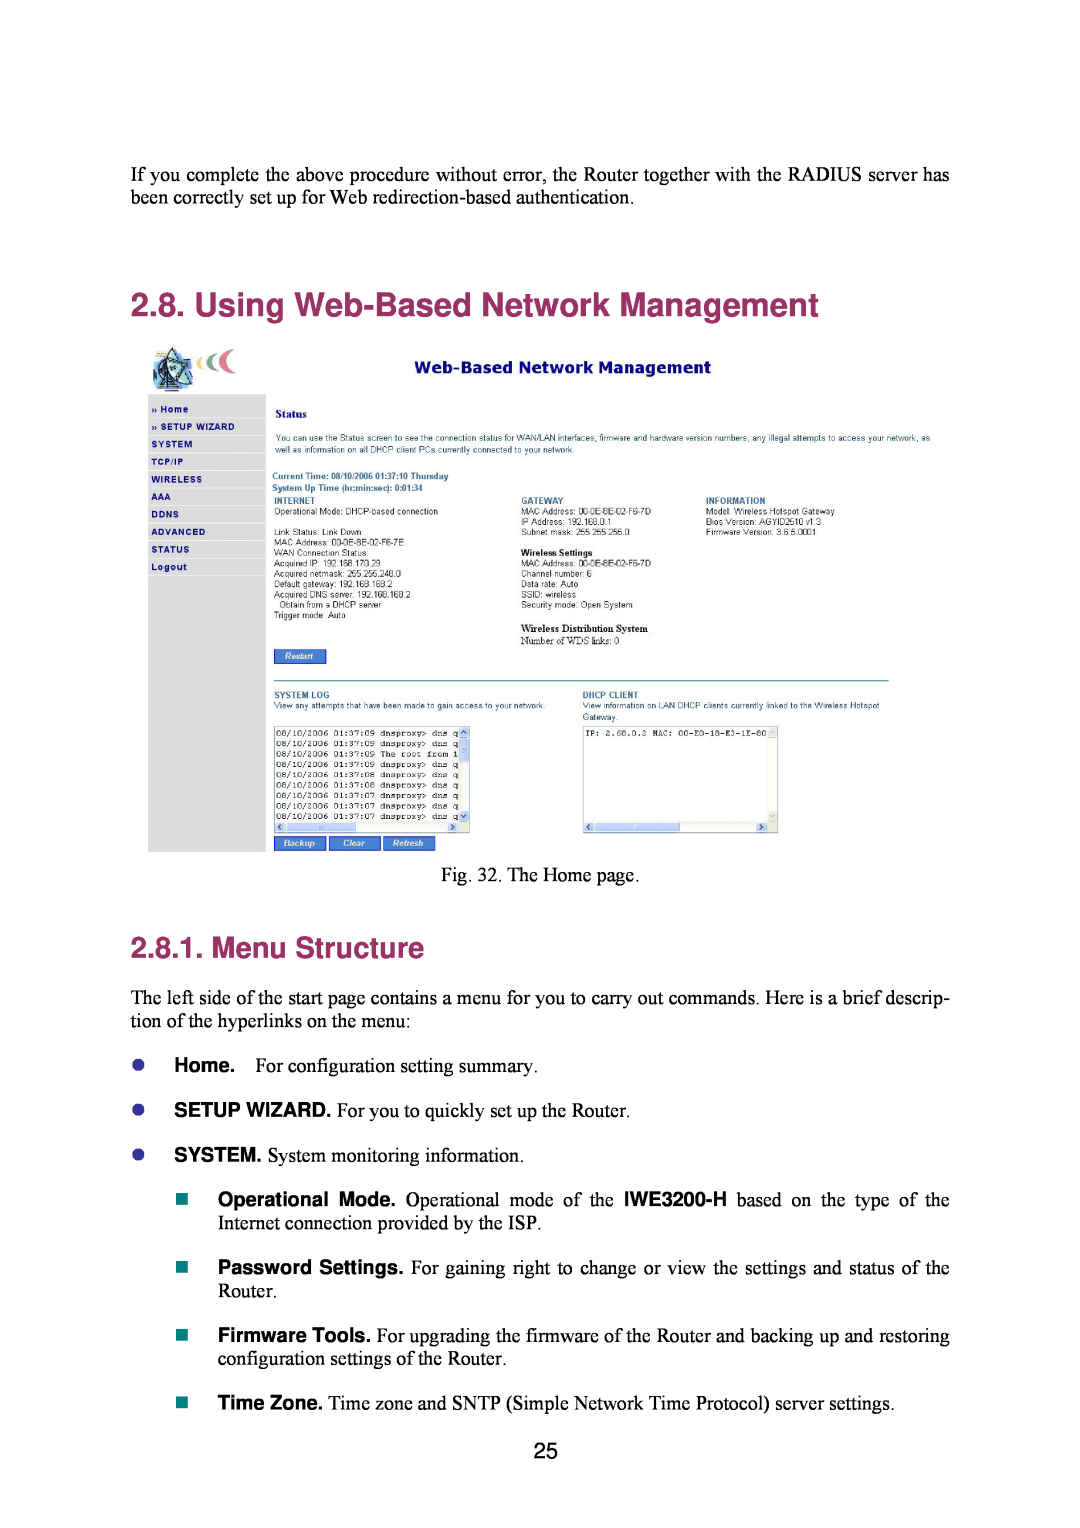 Epson IWE3200-H manual Using Web-BasedNetwork Management, Menu Structure 